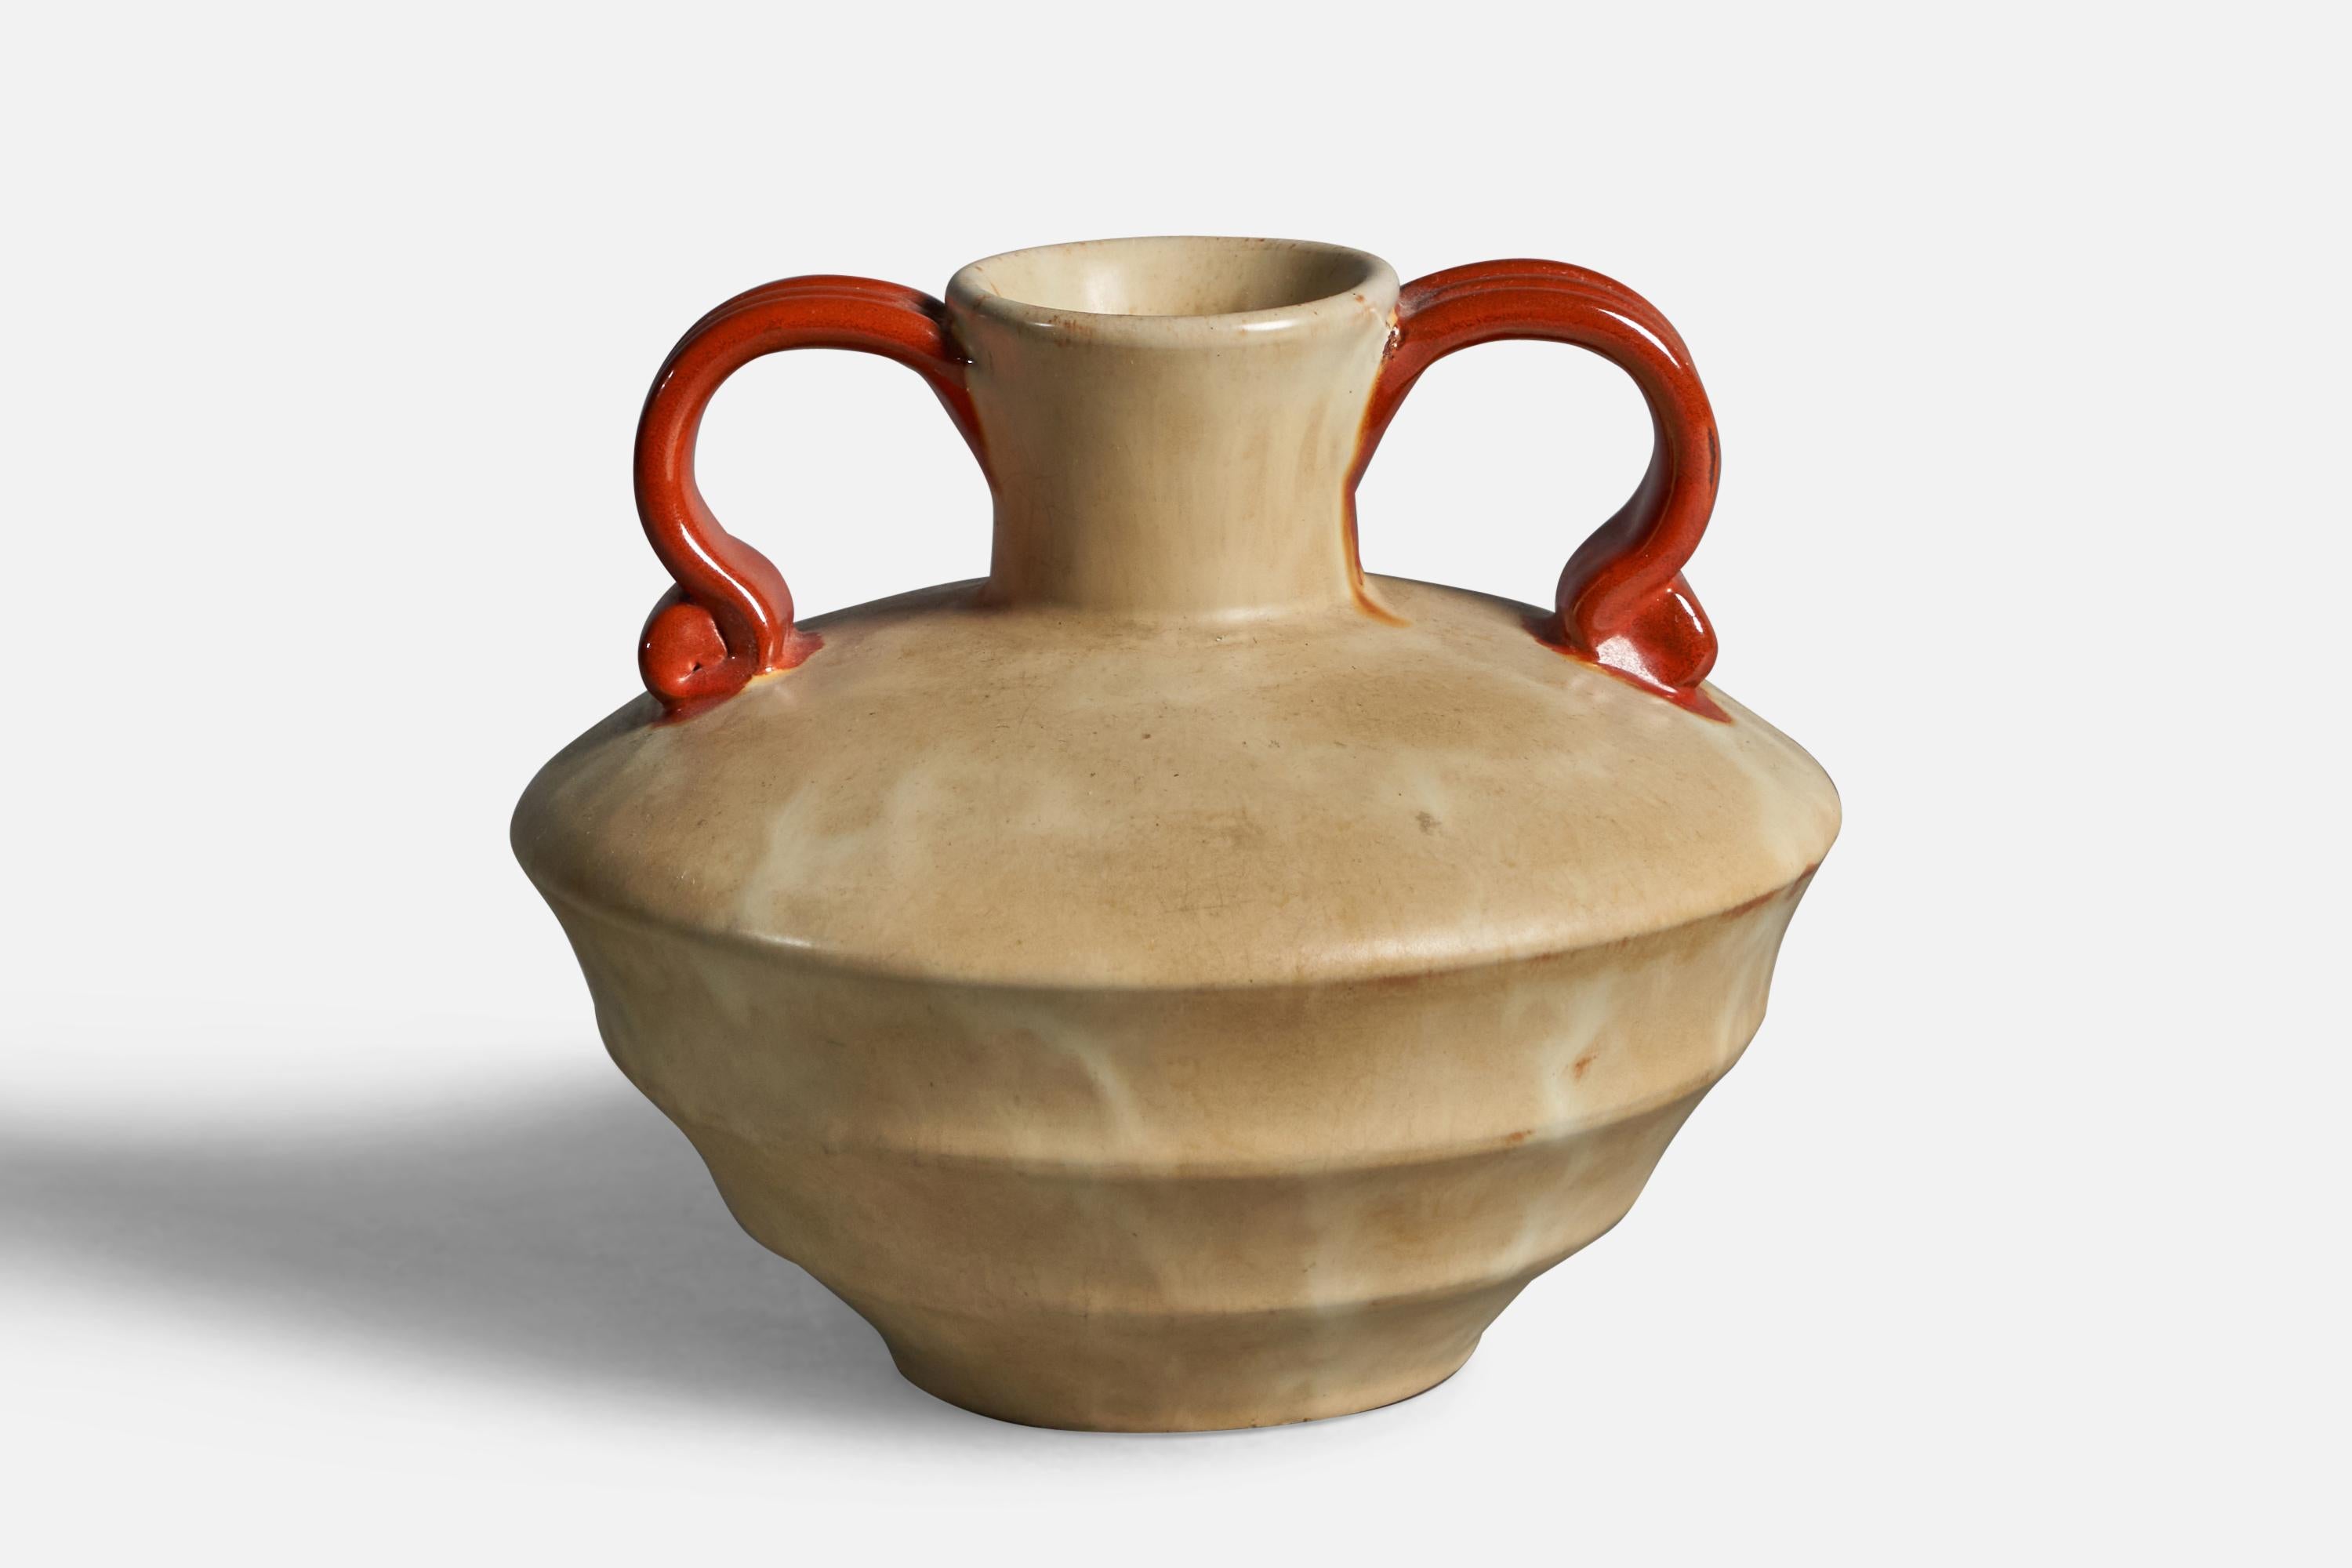 A beige and orange-glazed earthenware vase designed and produced by Upsala Ekeby, Sweden, 1930s.